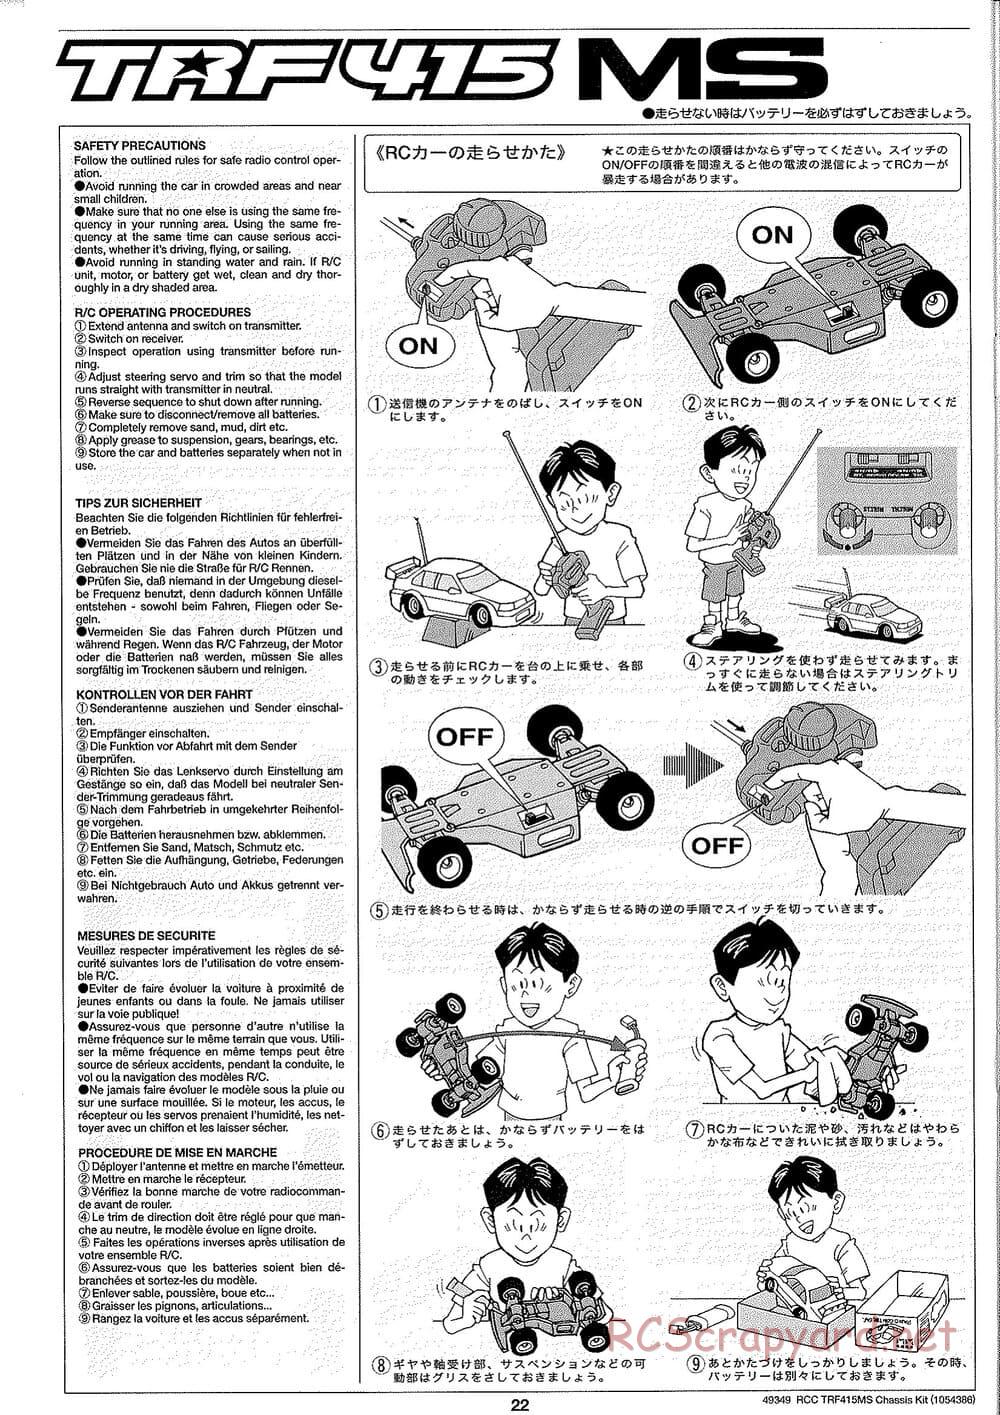 Tamiya - TRF415-MS Chassis - Manual - Page 22